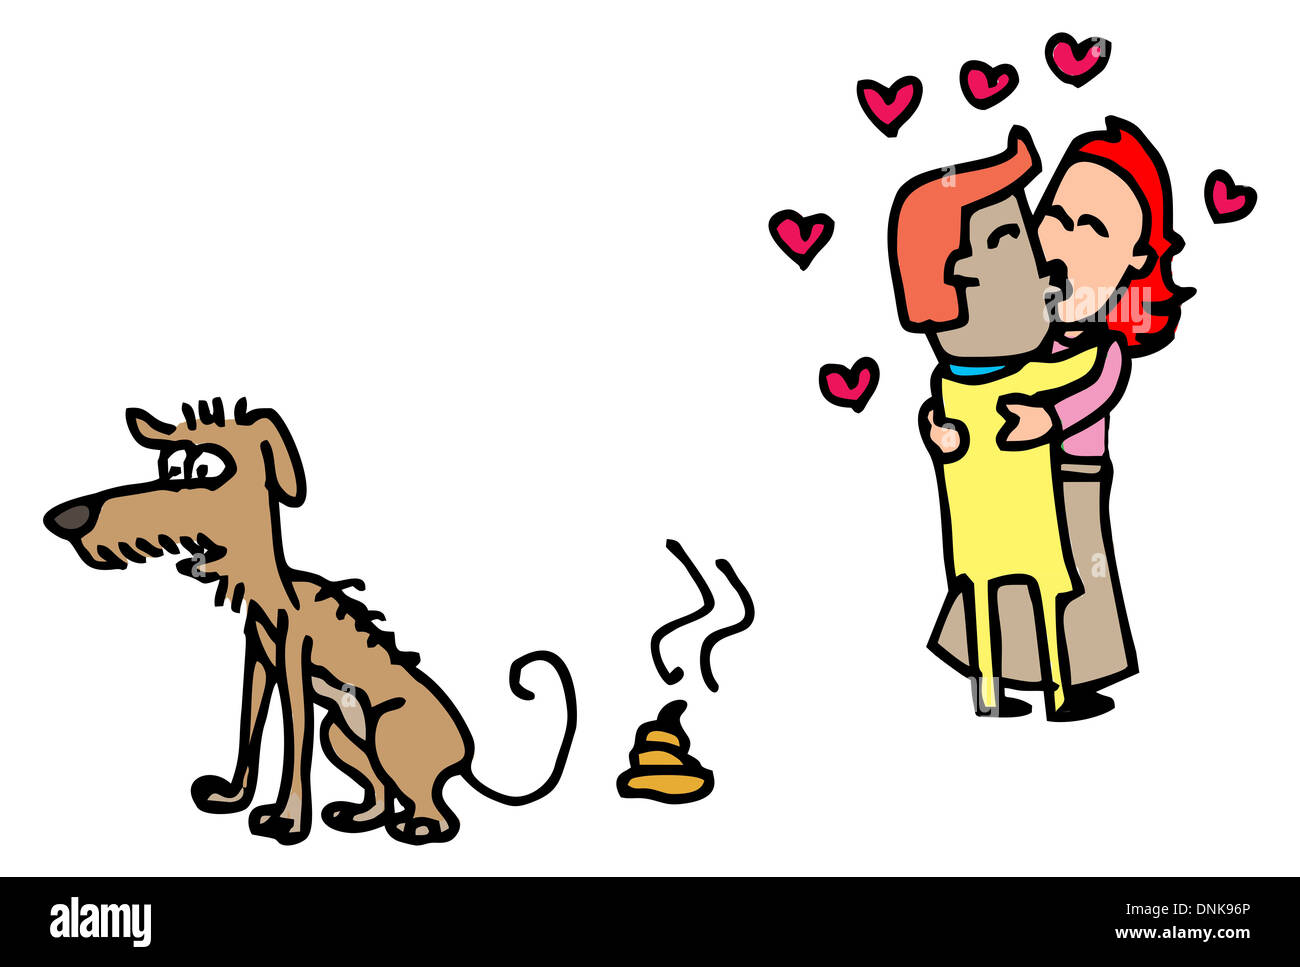 Illustrative representation of Dog Poo and Love Birds Stock Photo